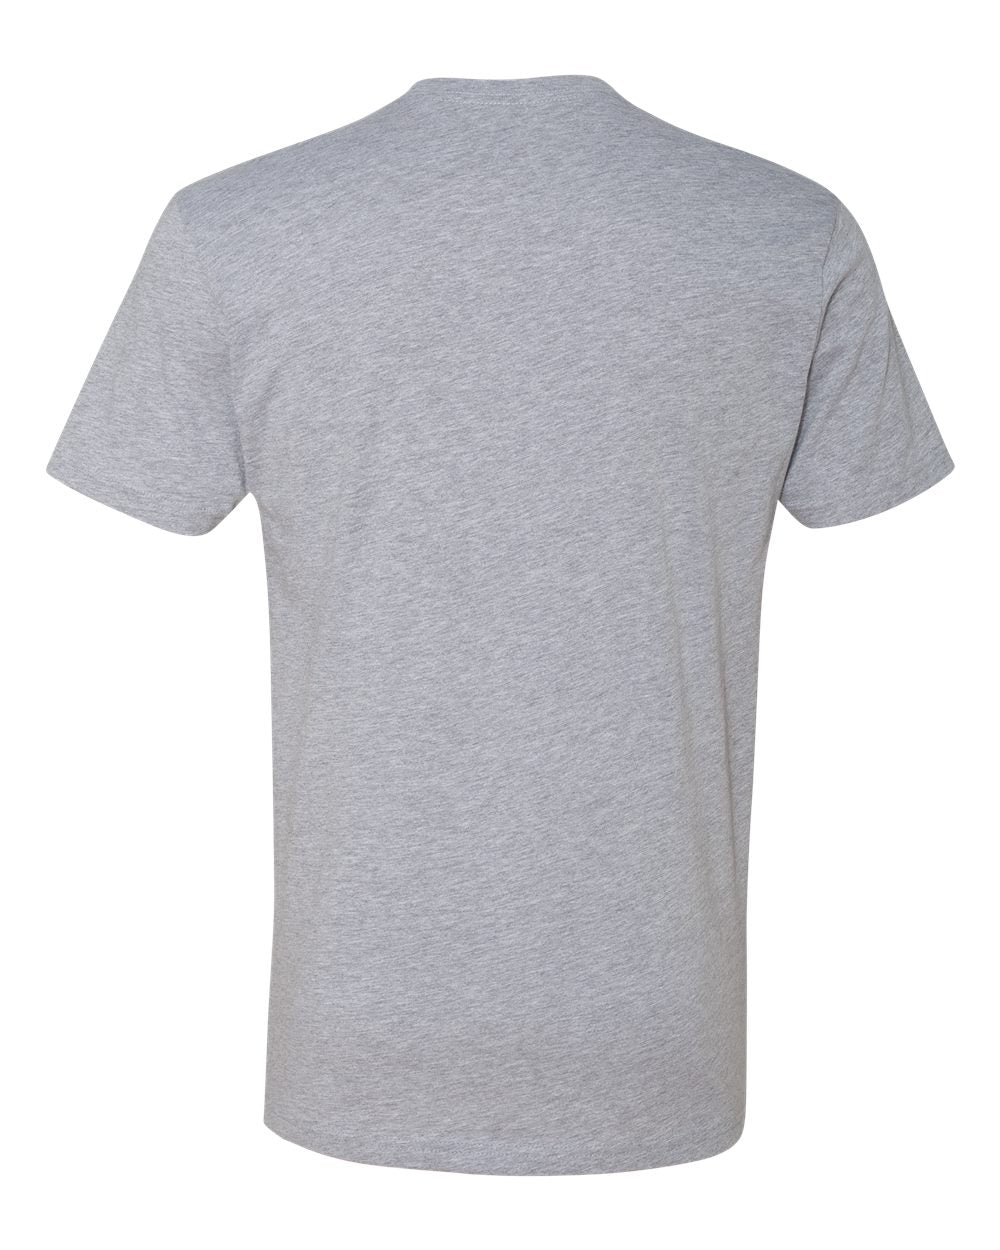 The University of New Mexico Vintage Lobos Light Grey T-Shirt